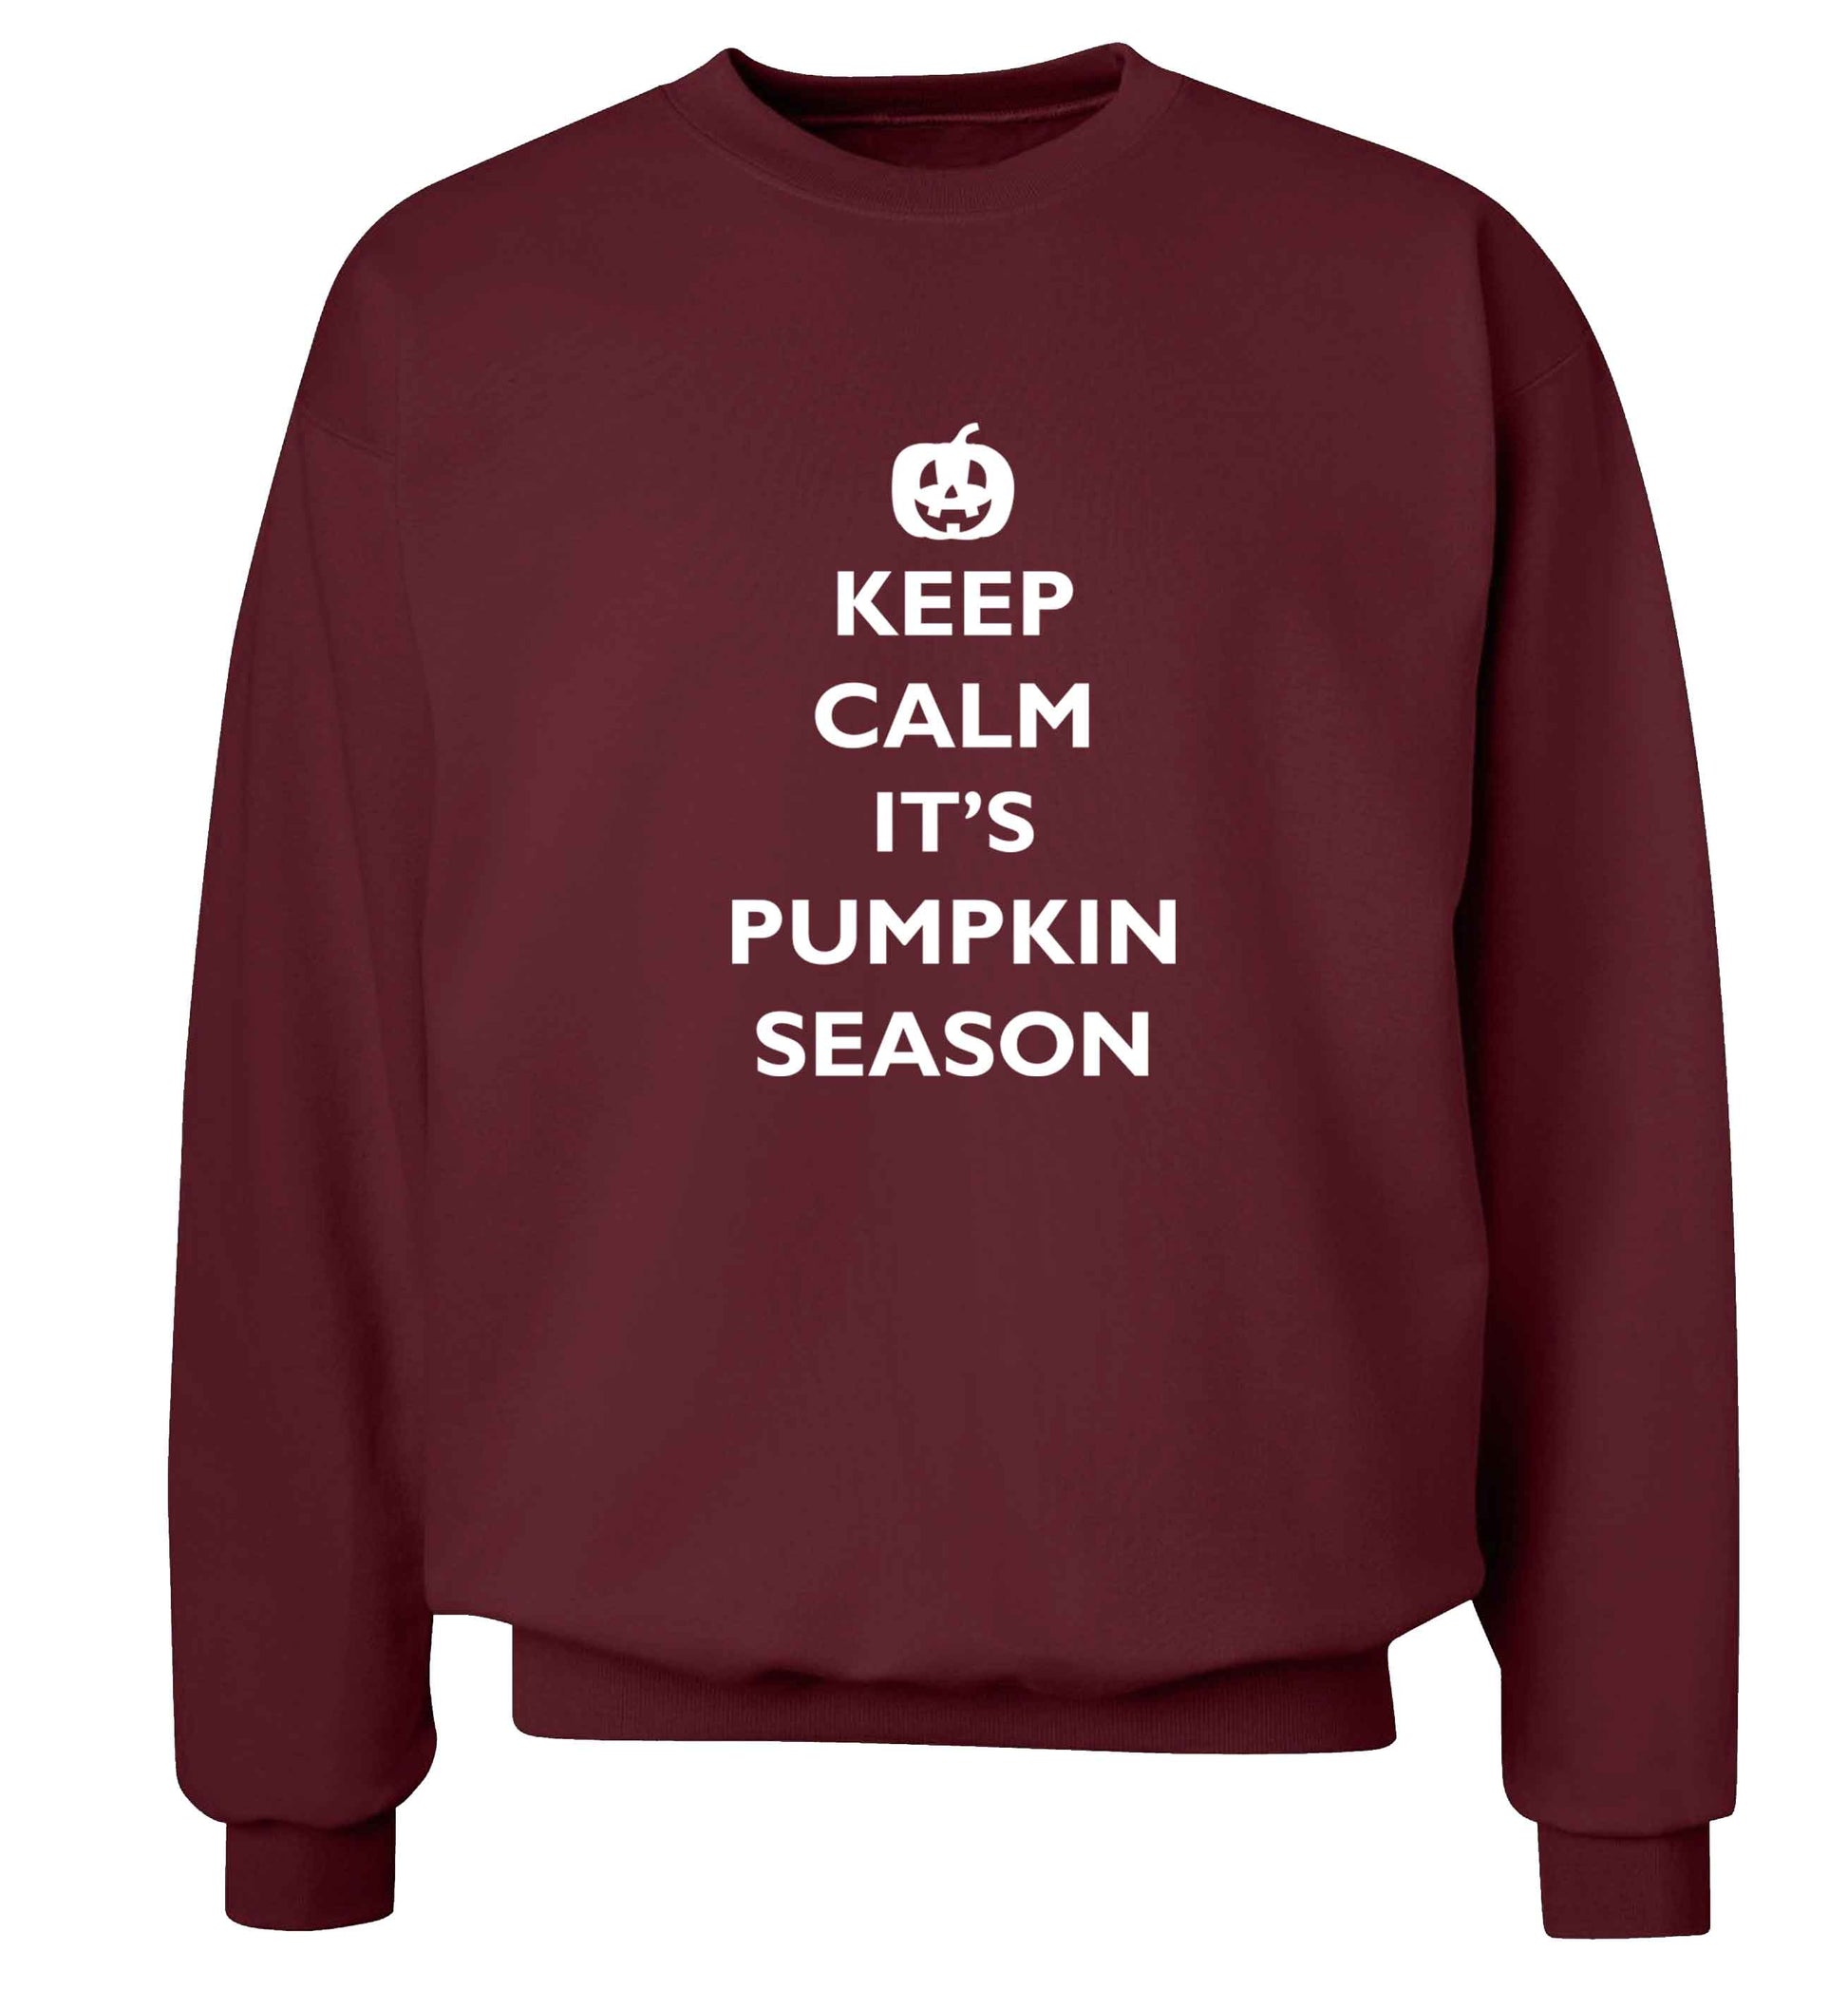 Calm Pumpkin Season adult's unisex maroon sweater 2XL